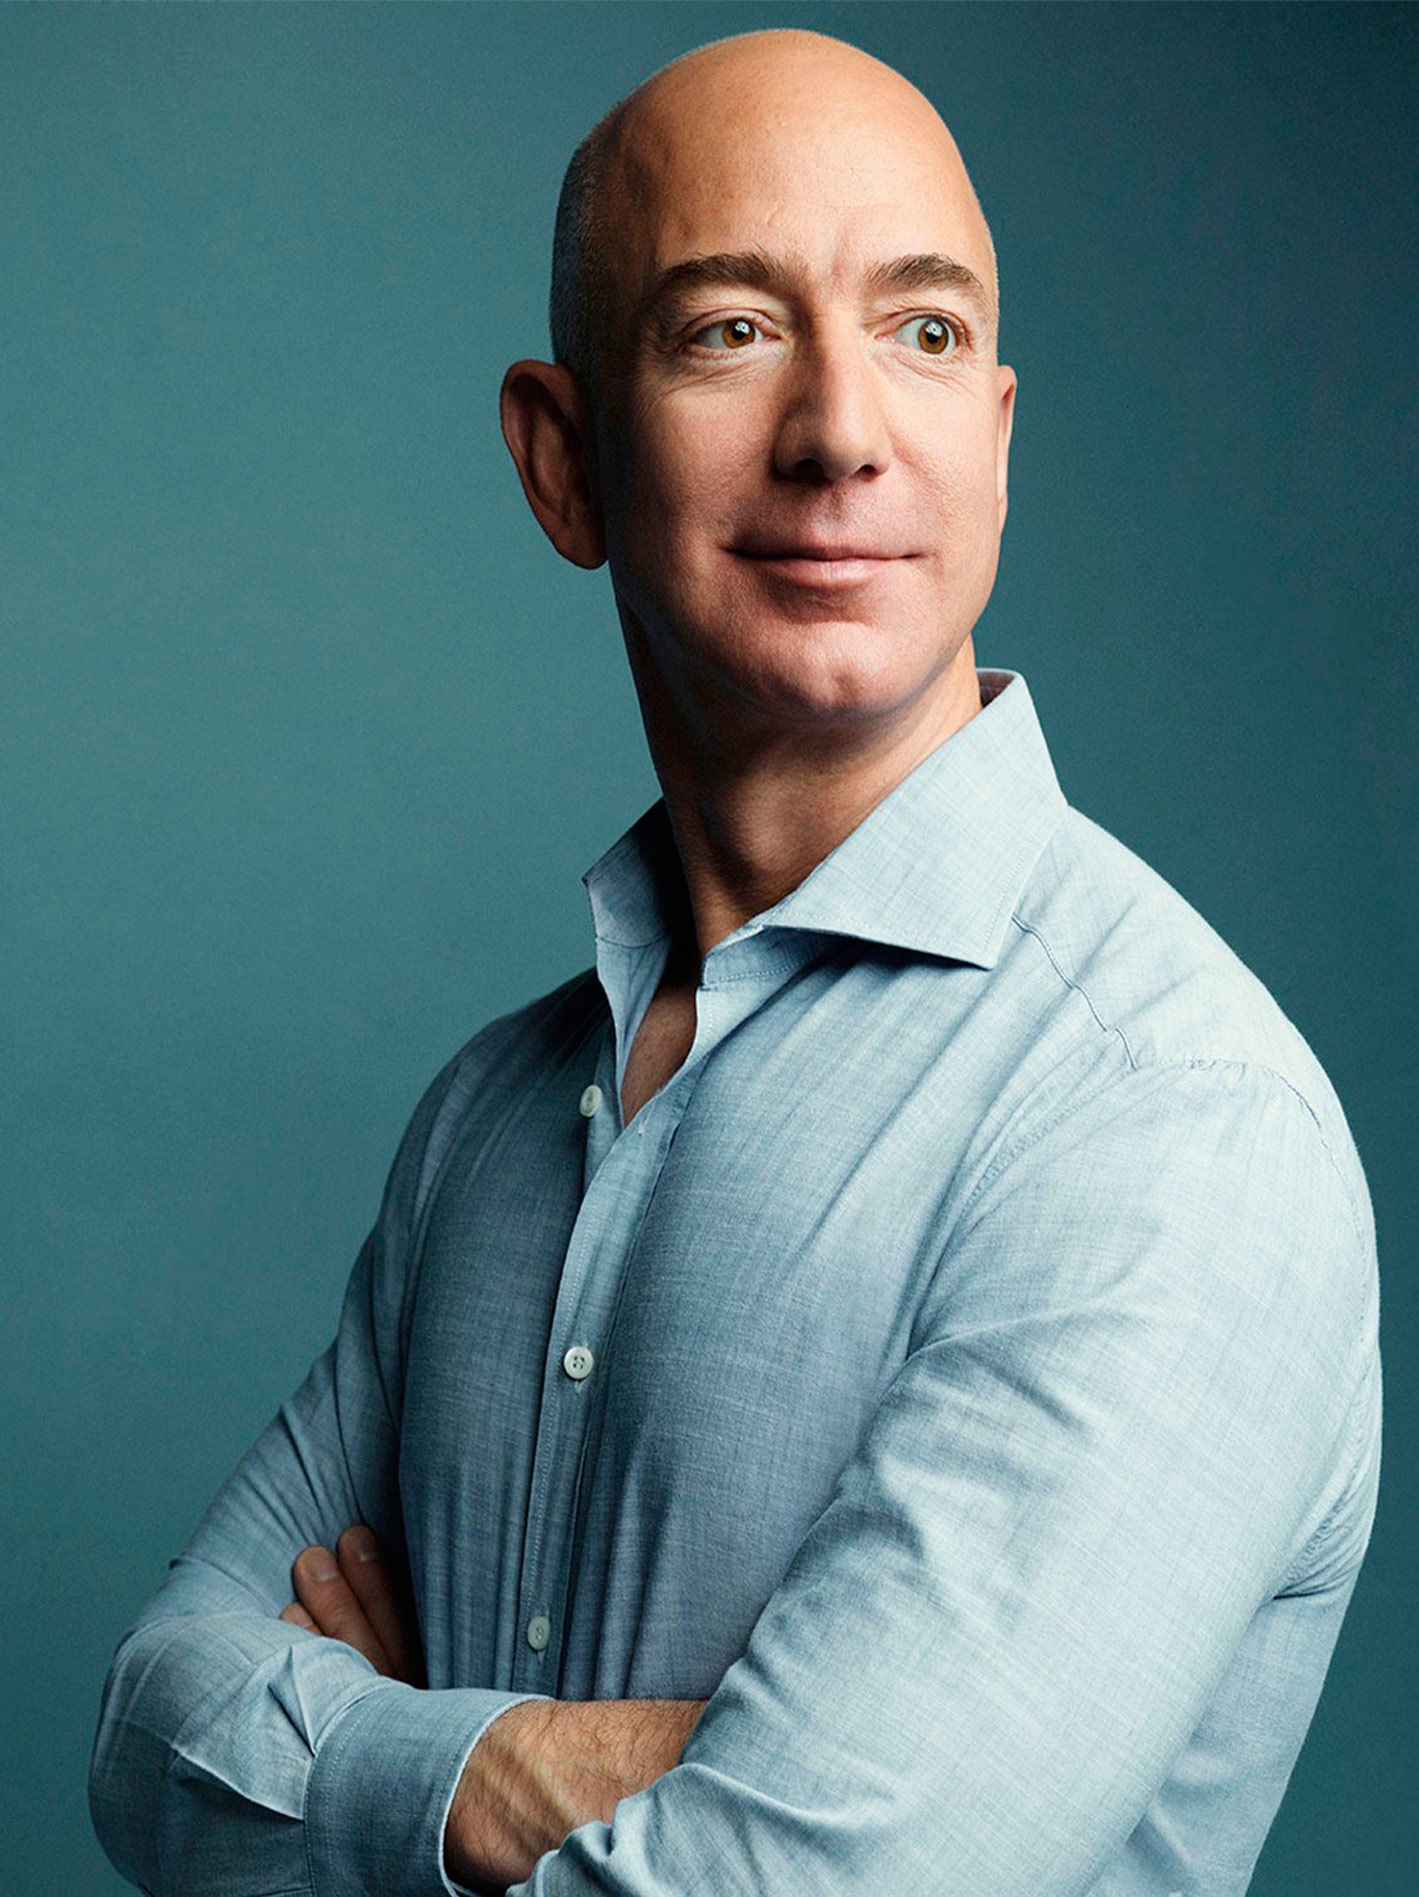 Foto coorporativa do Fundador Jeff-Bezos da Amazon